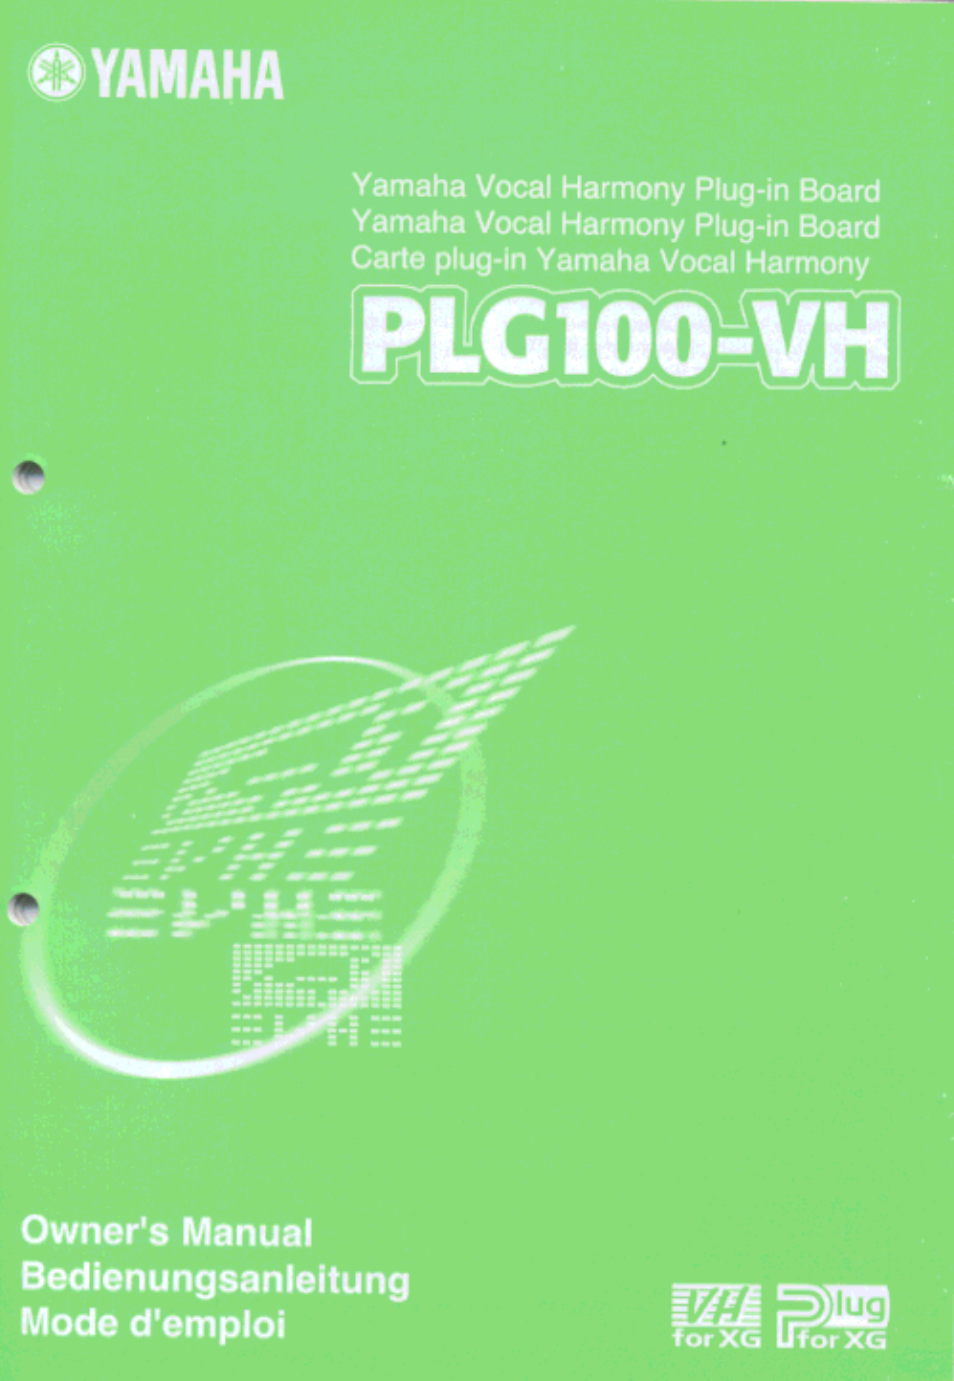 Yamaha PLG100-VH User Manual | 32 pages